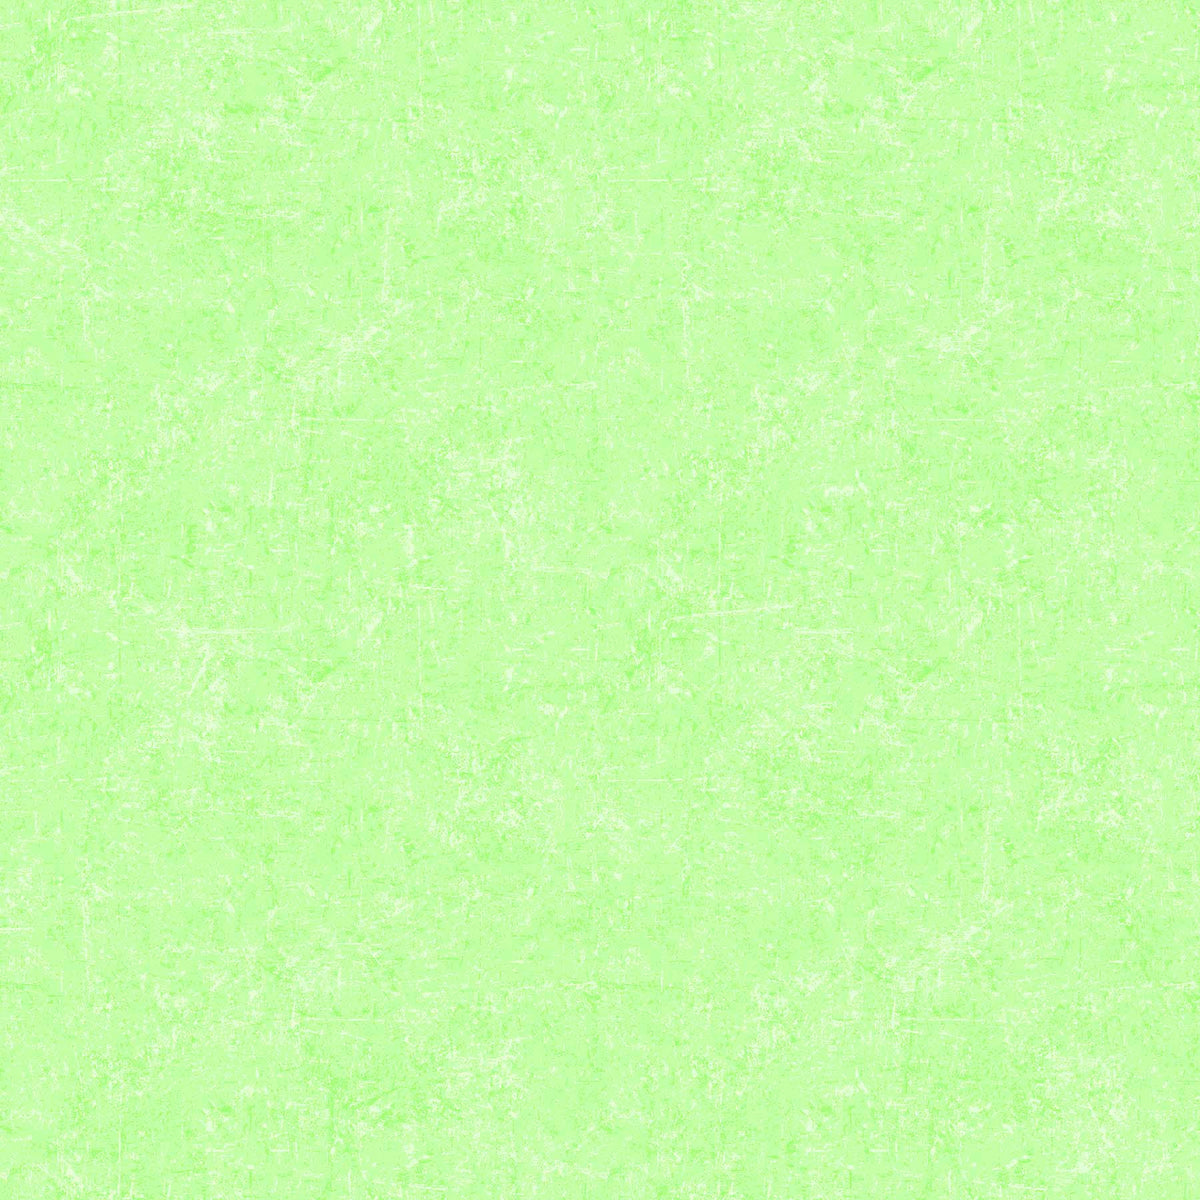 Glisten Sorbet Quilt Fabric - Blender in Minty Green - P10091-65